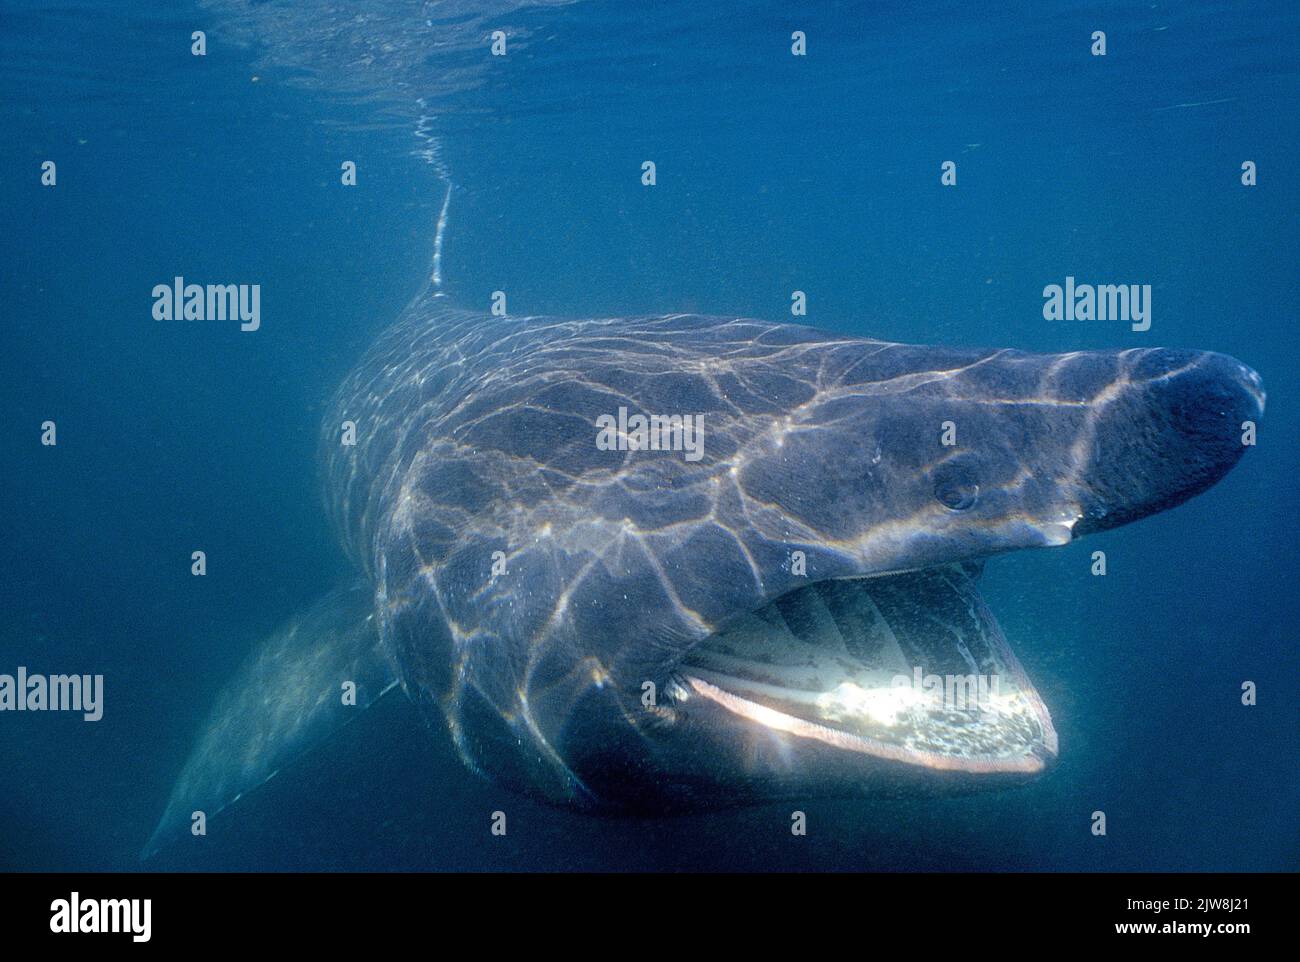 Basking shark (Cetorhinus maximus), Canada, Atlantic ocean Stock Photo